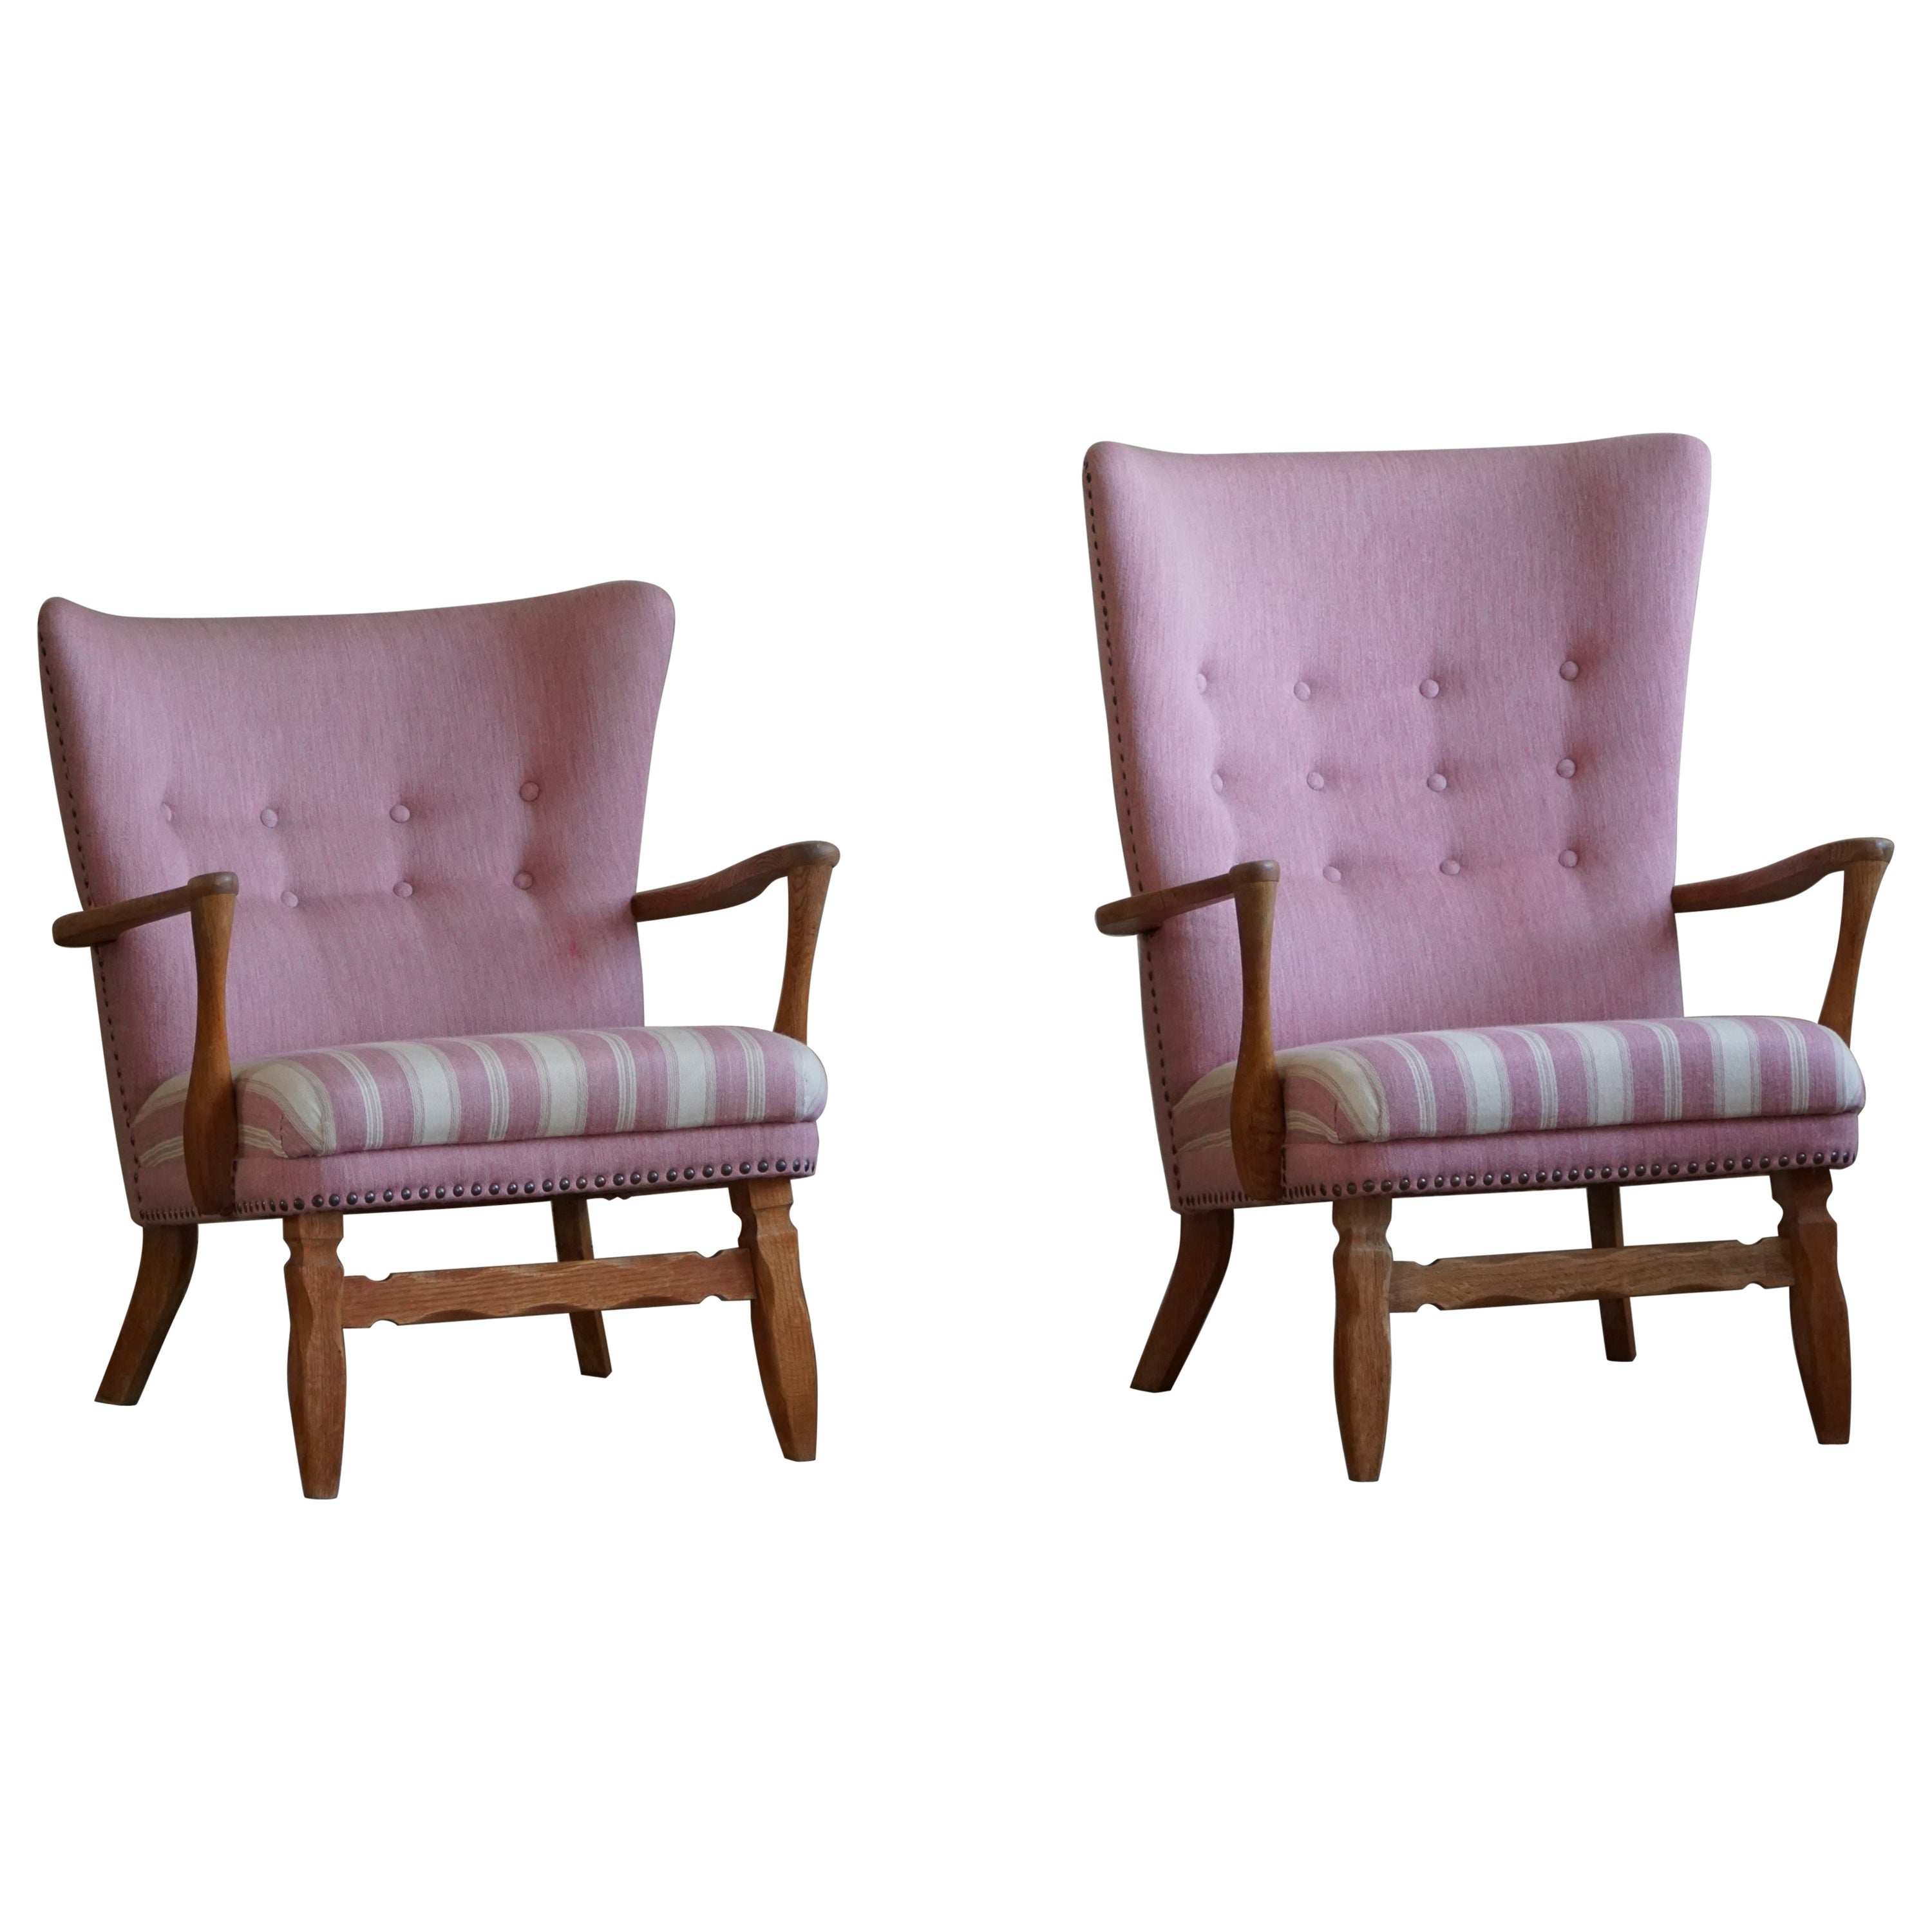 Pair of Midcentury Danish Modern Lounge Chair in Oak, Viggo Boesen, 1960s For Sale